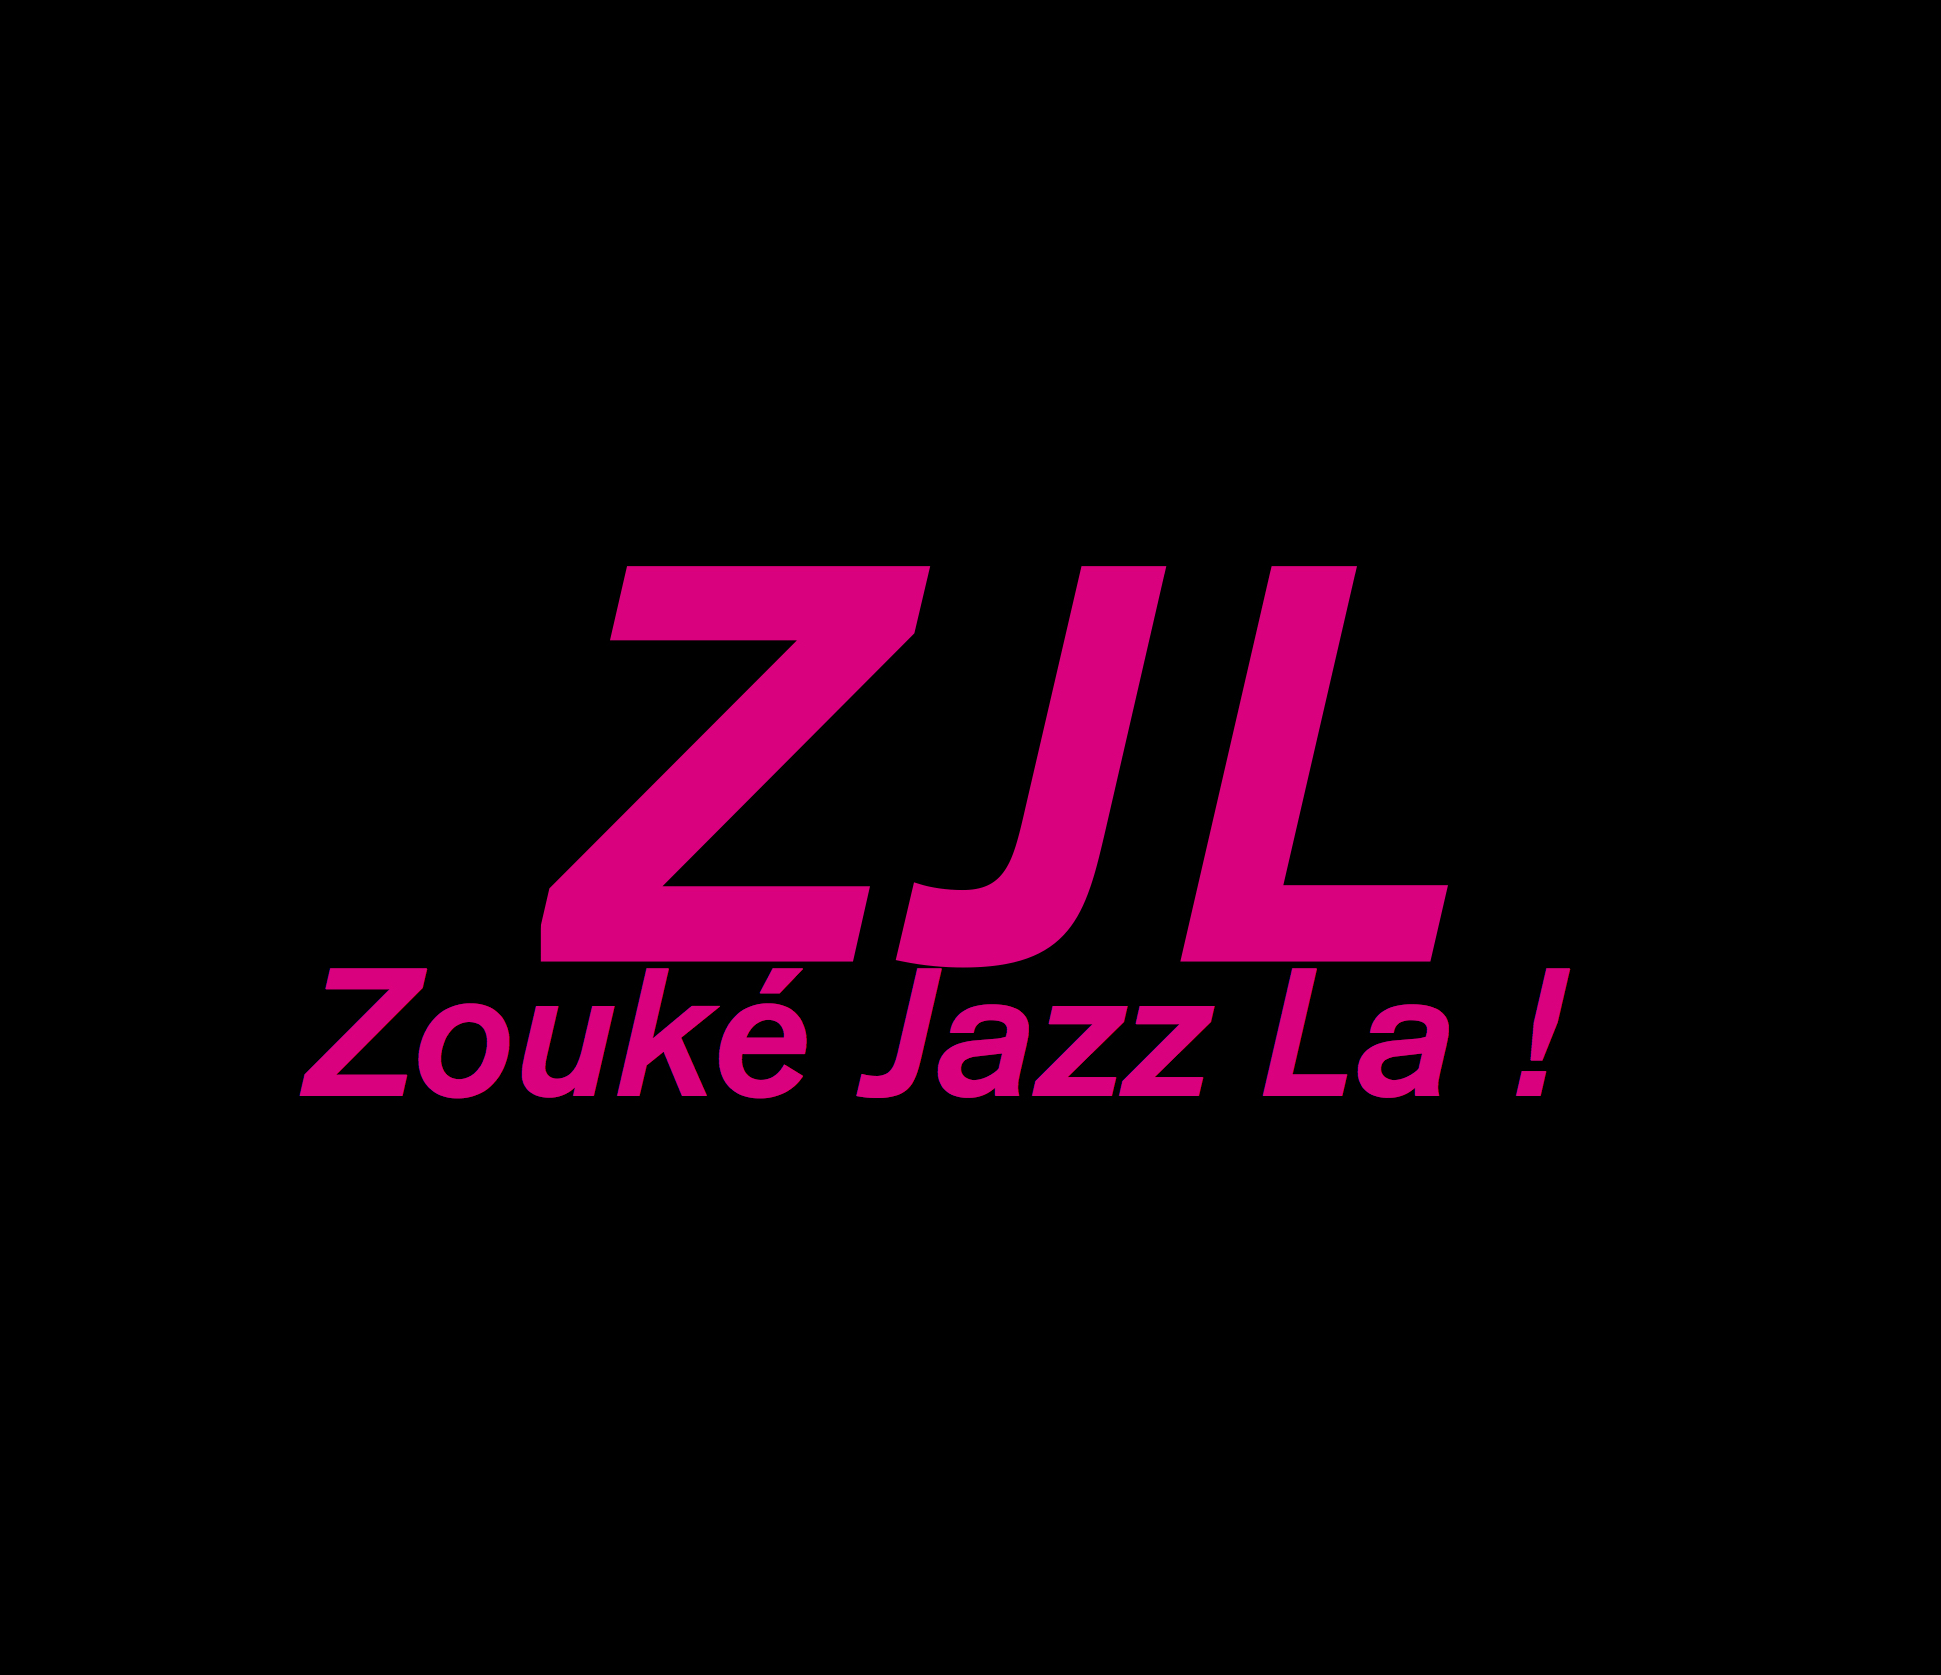 ZJL (Zouké Jazz La !)